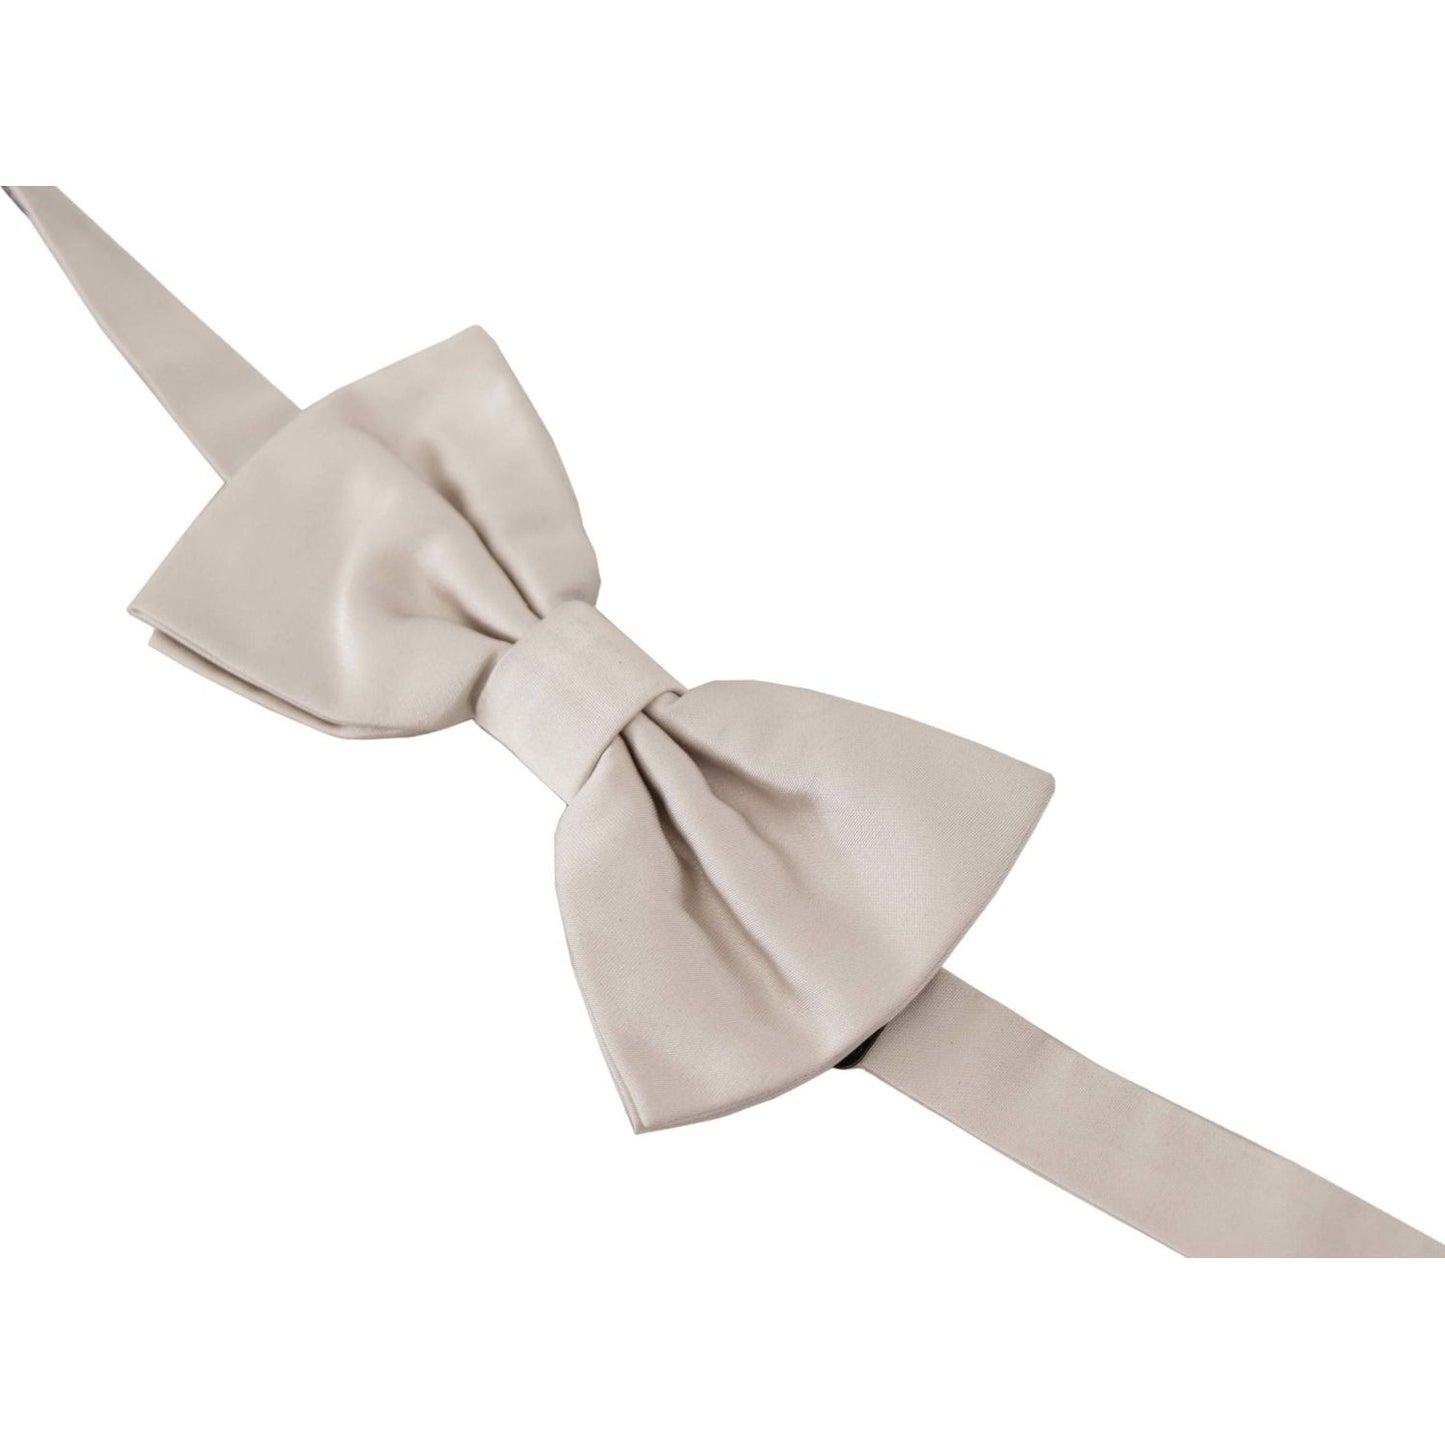 Exquisite Silk Gray Bow Tie